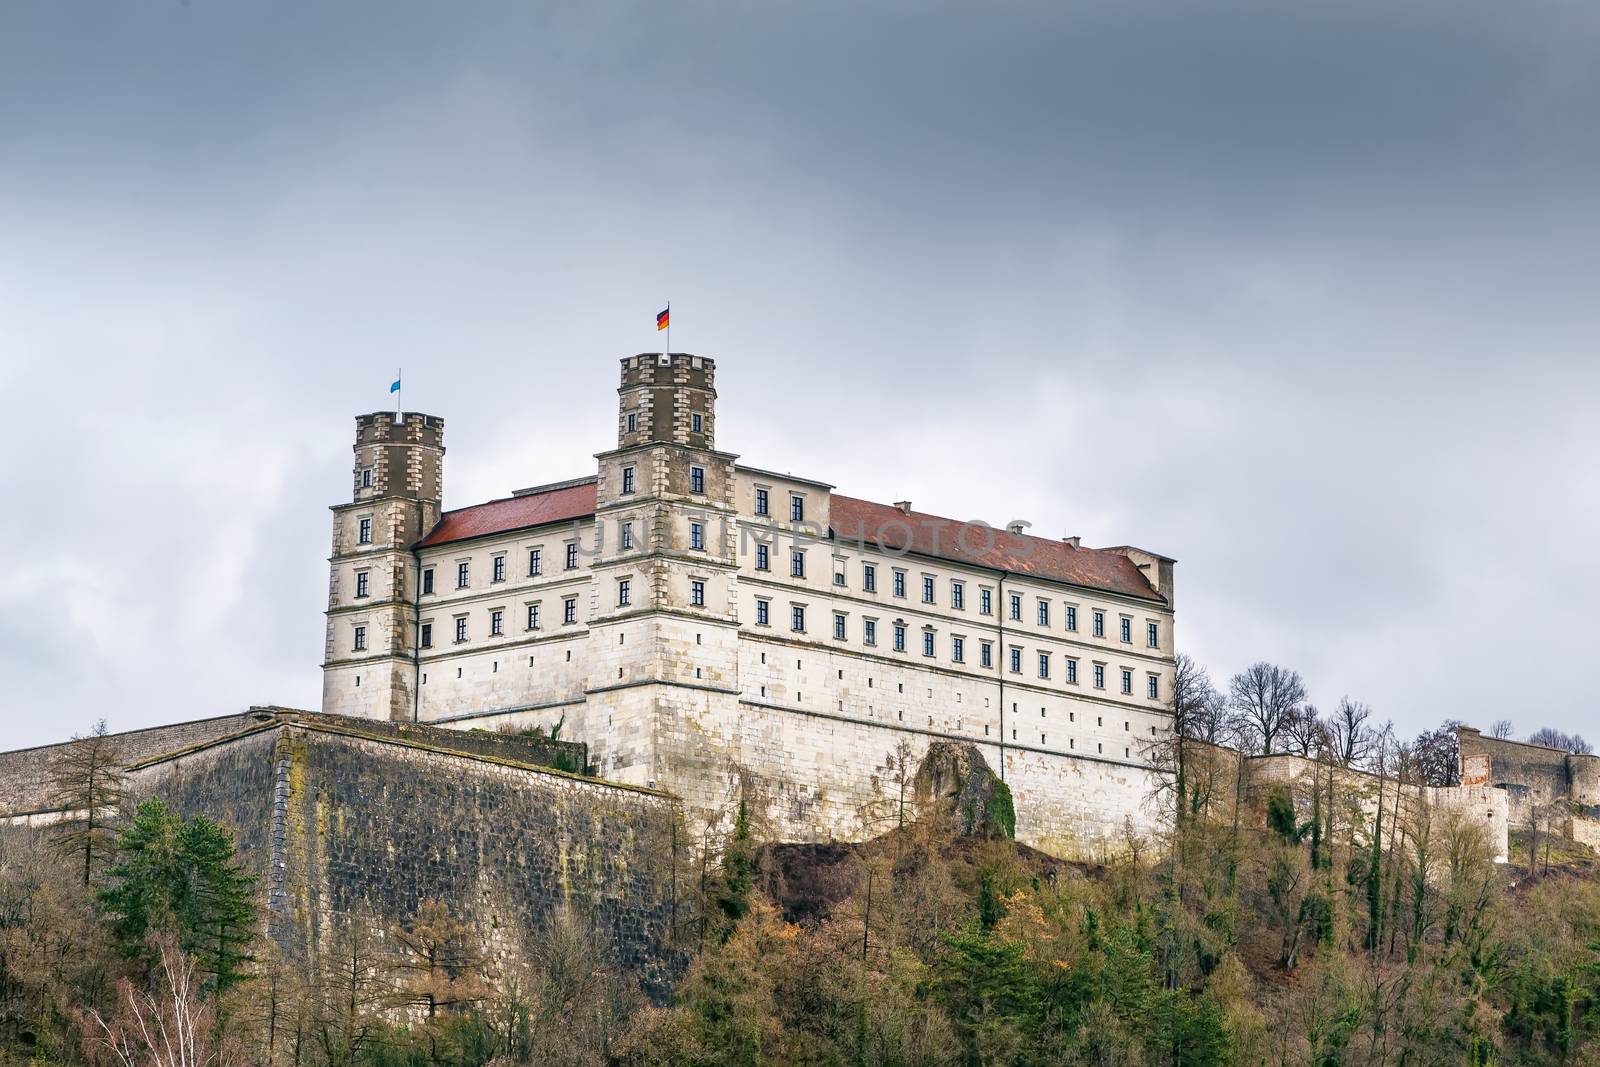 Willibaldsburg castle, Eichstatt, Germany by borisb17